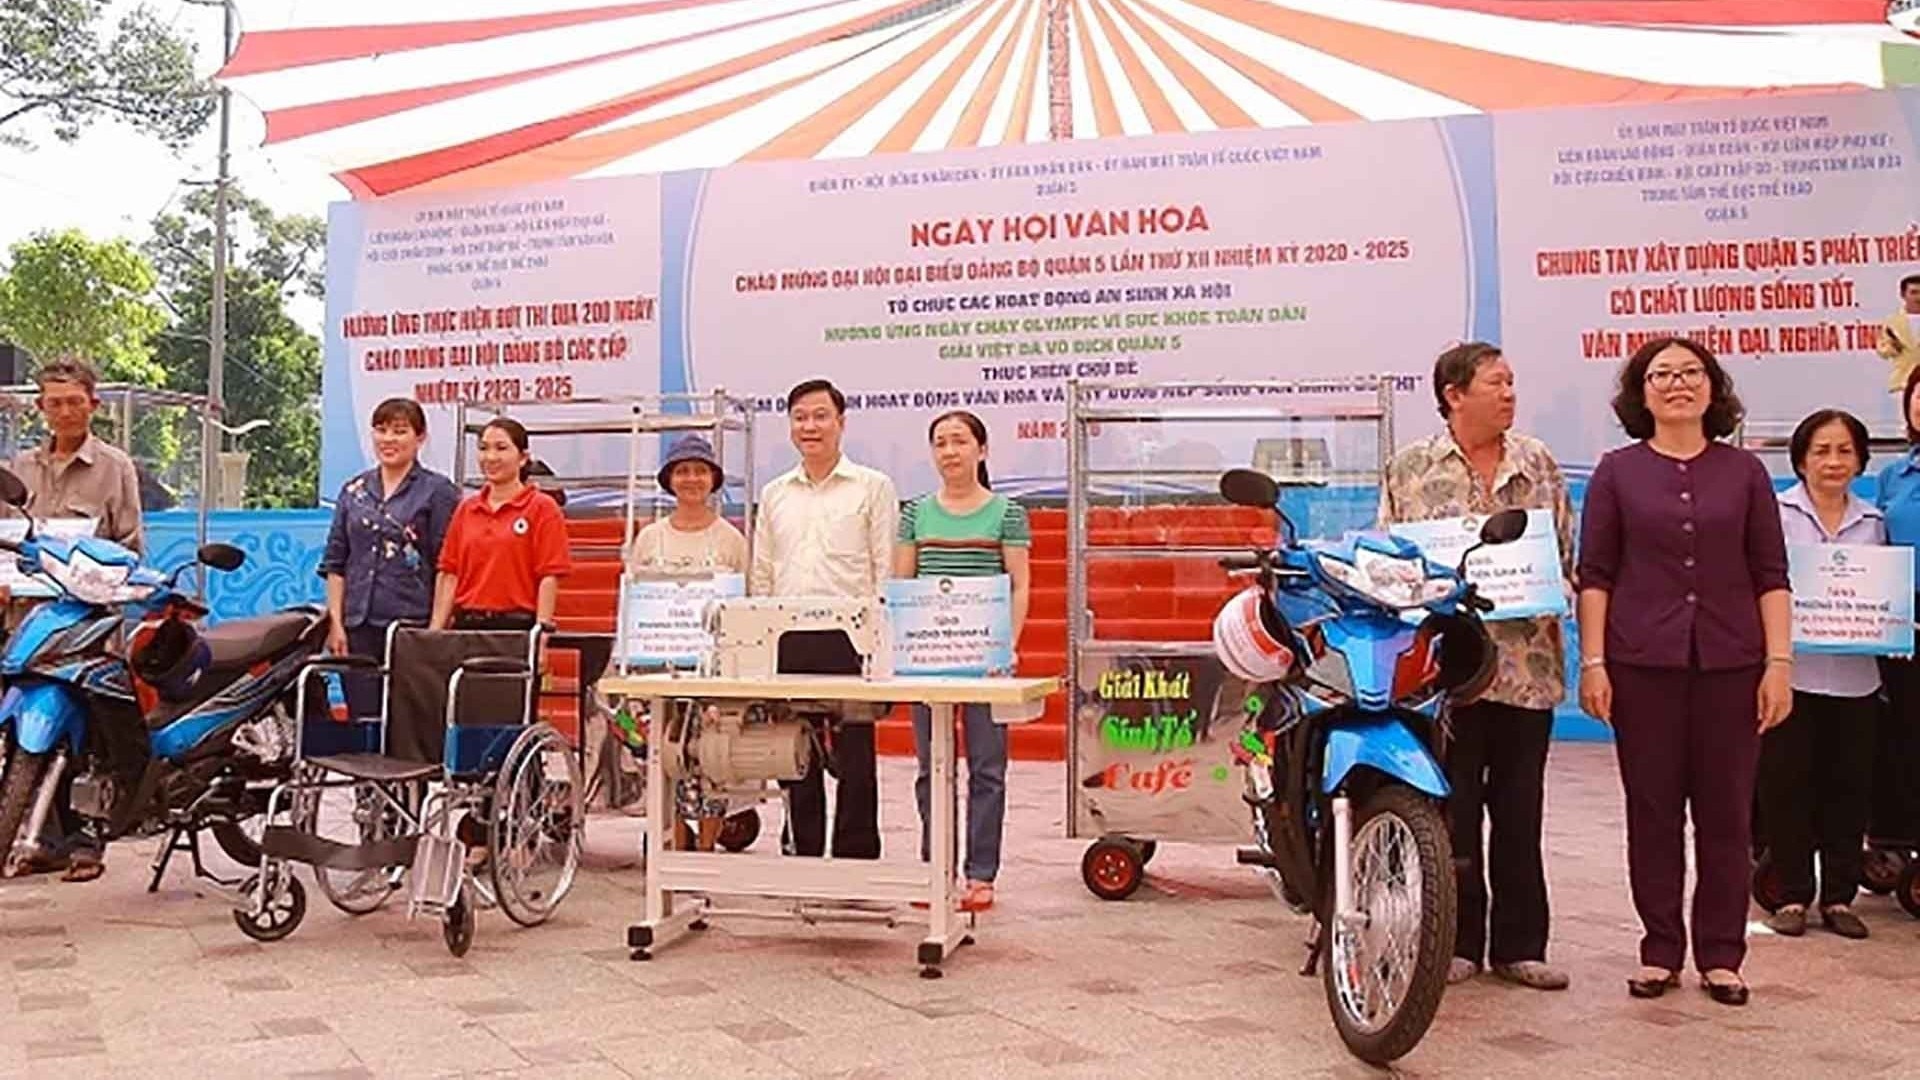 Promoting the rights of ethnic minorities Vietnam.vn